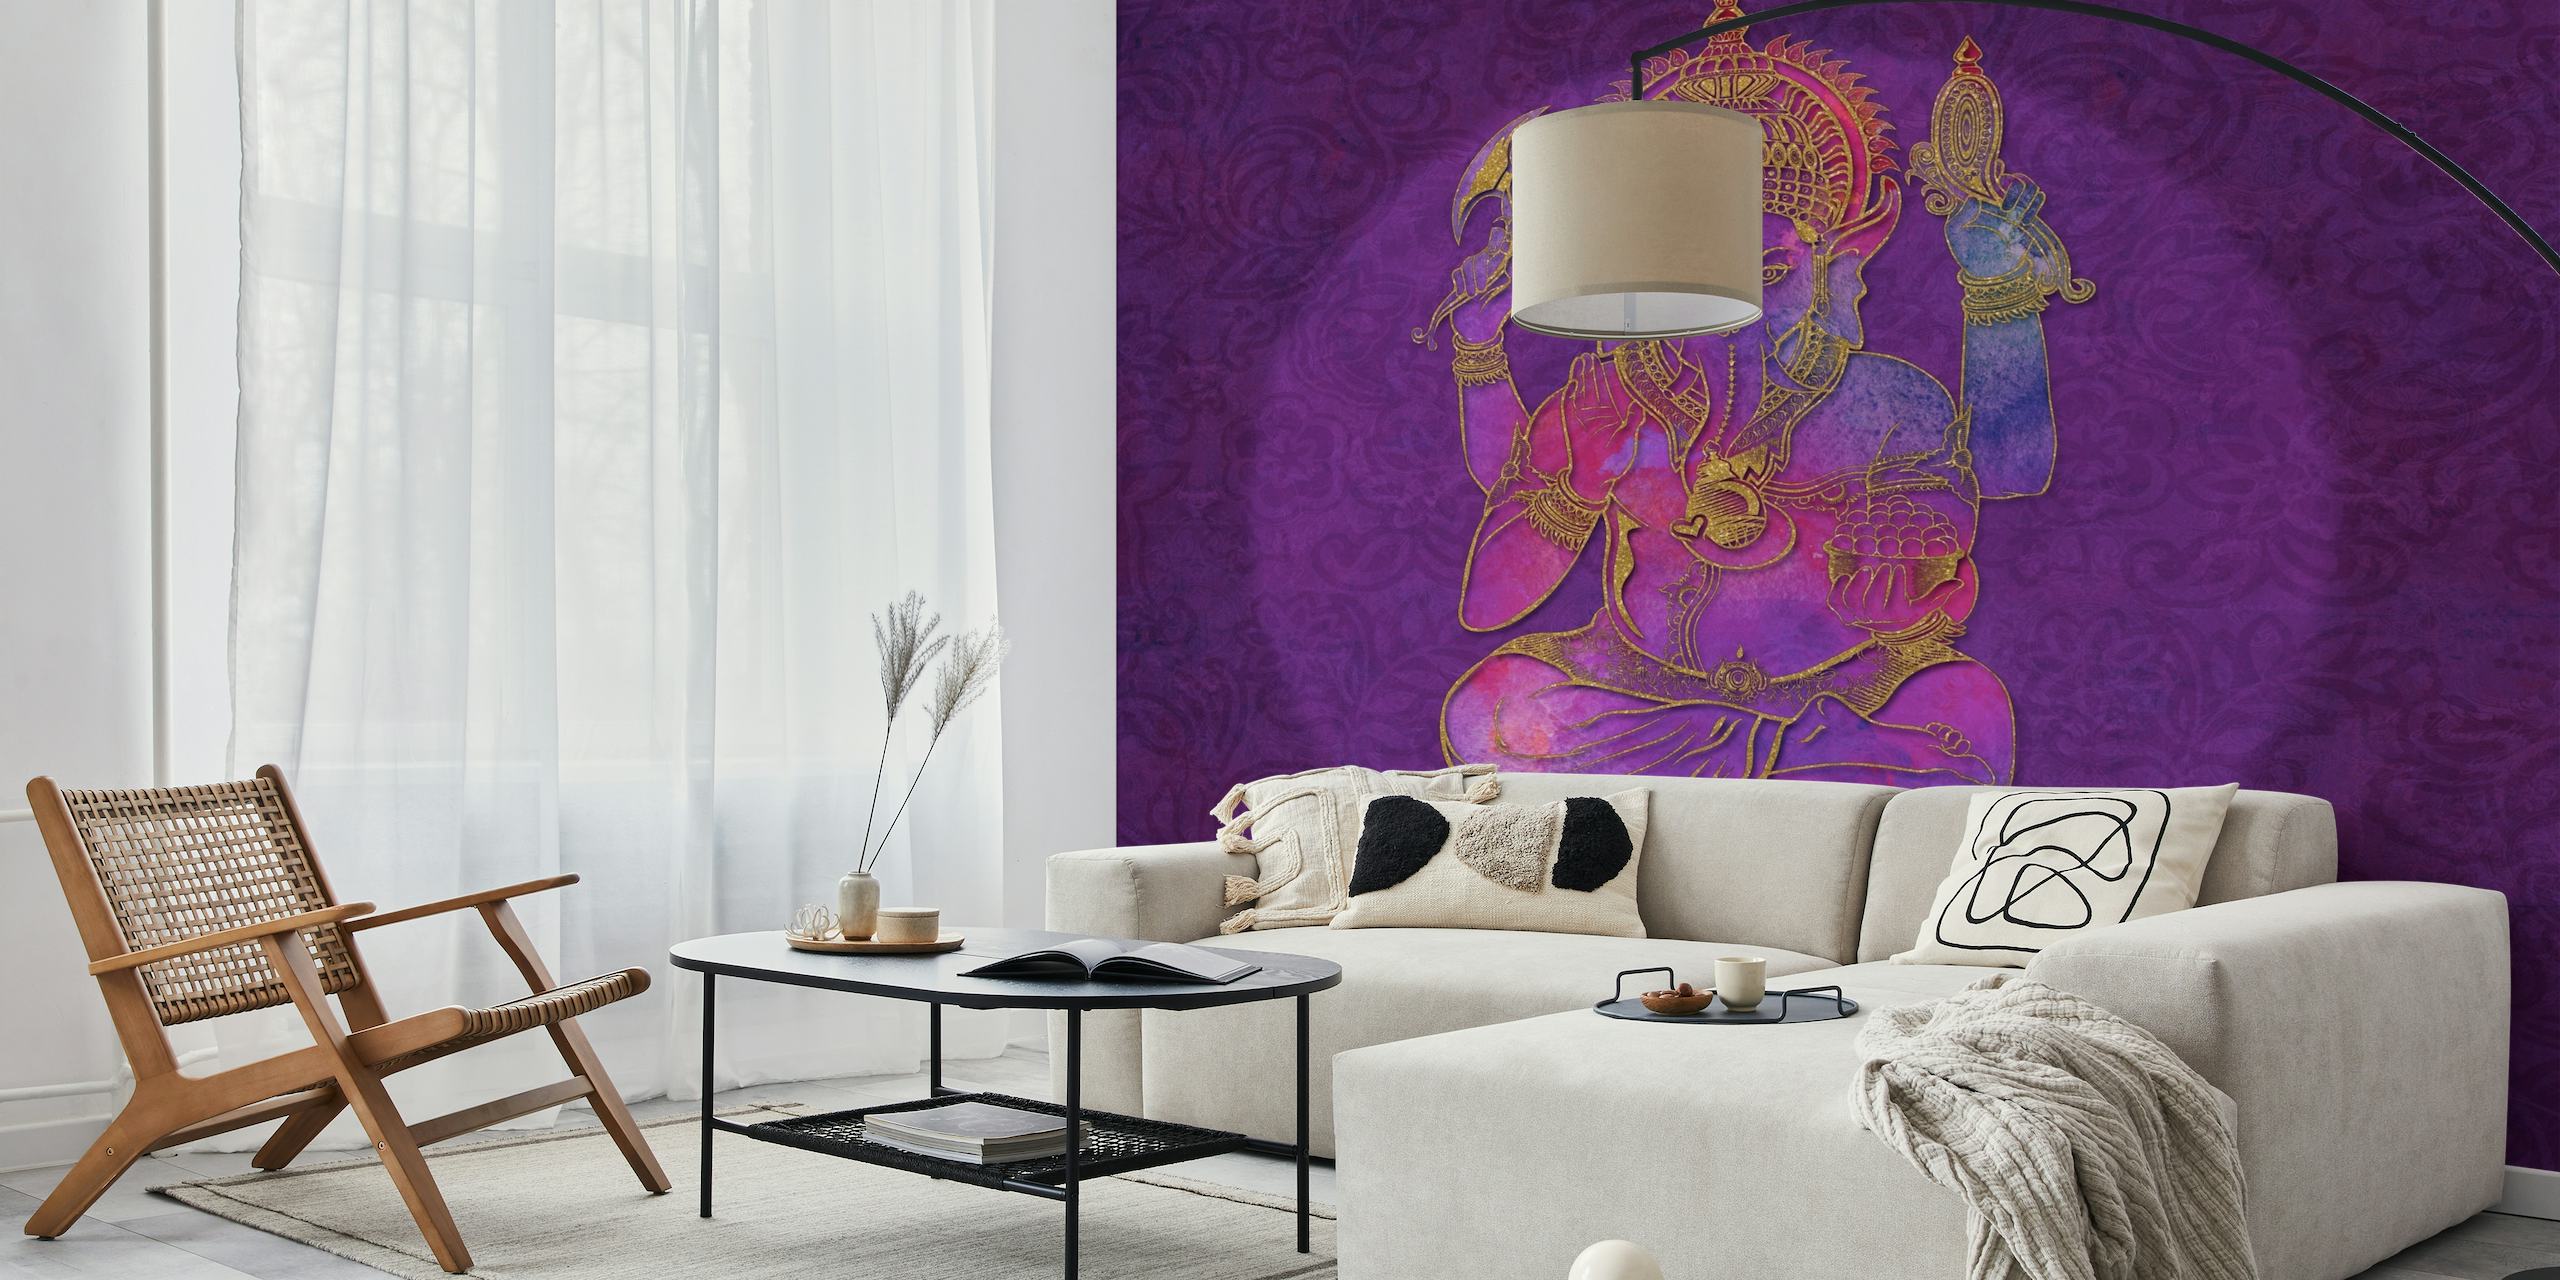 Ganesha Elephant Hindu God Wall Mural in rich purple hues for spiritual decor